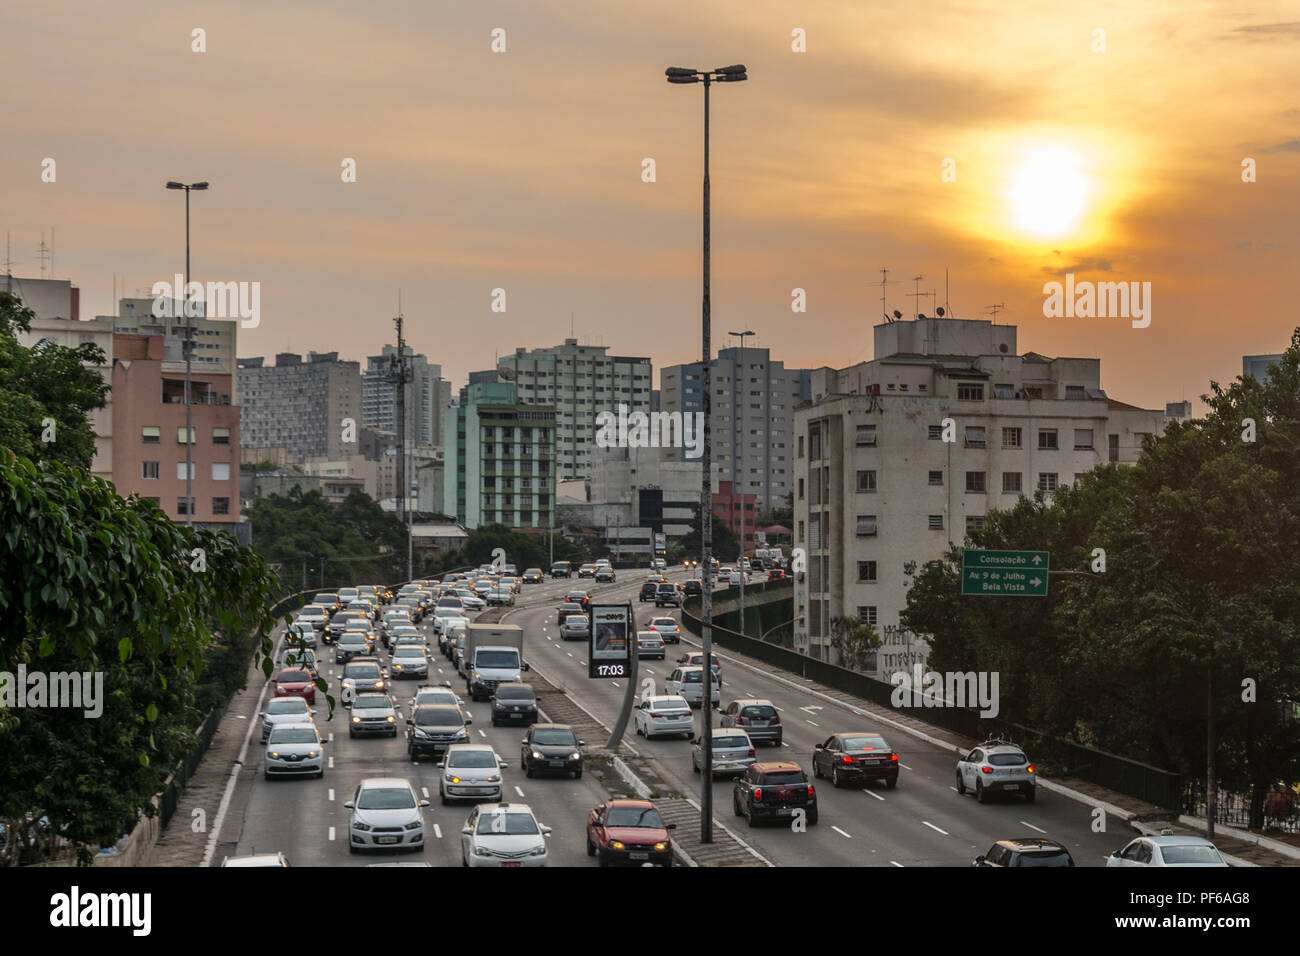 Traffic Jam in 23 De Maio Avenue, in Rainy Day Editorial Stock Photo -  Image of february, paulo: 131418808